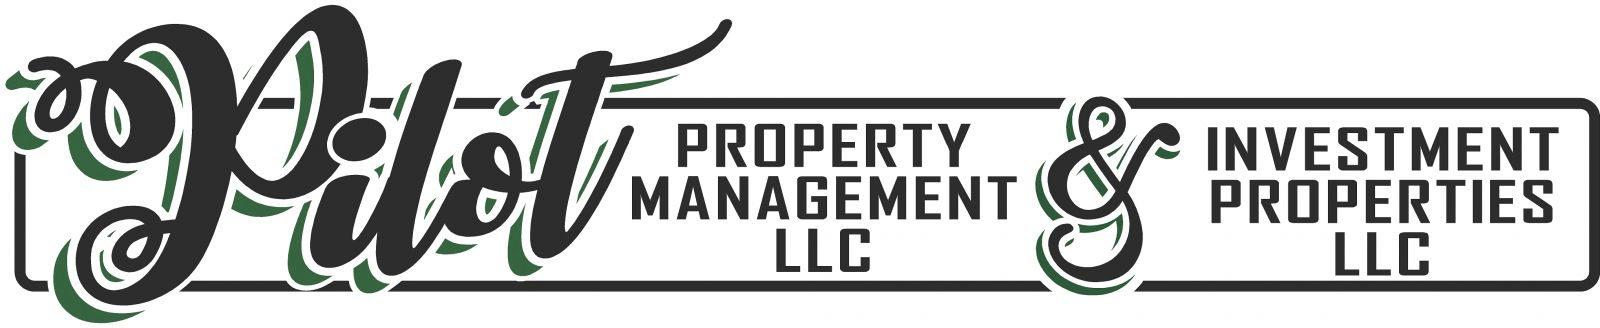 Pilot Property Management LLC